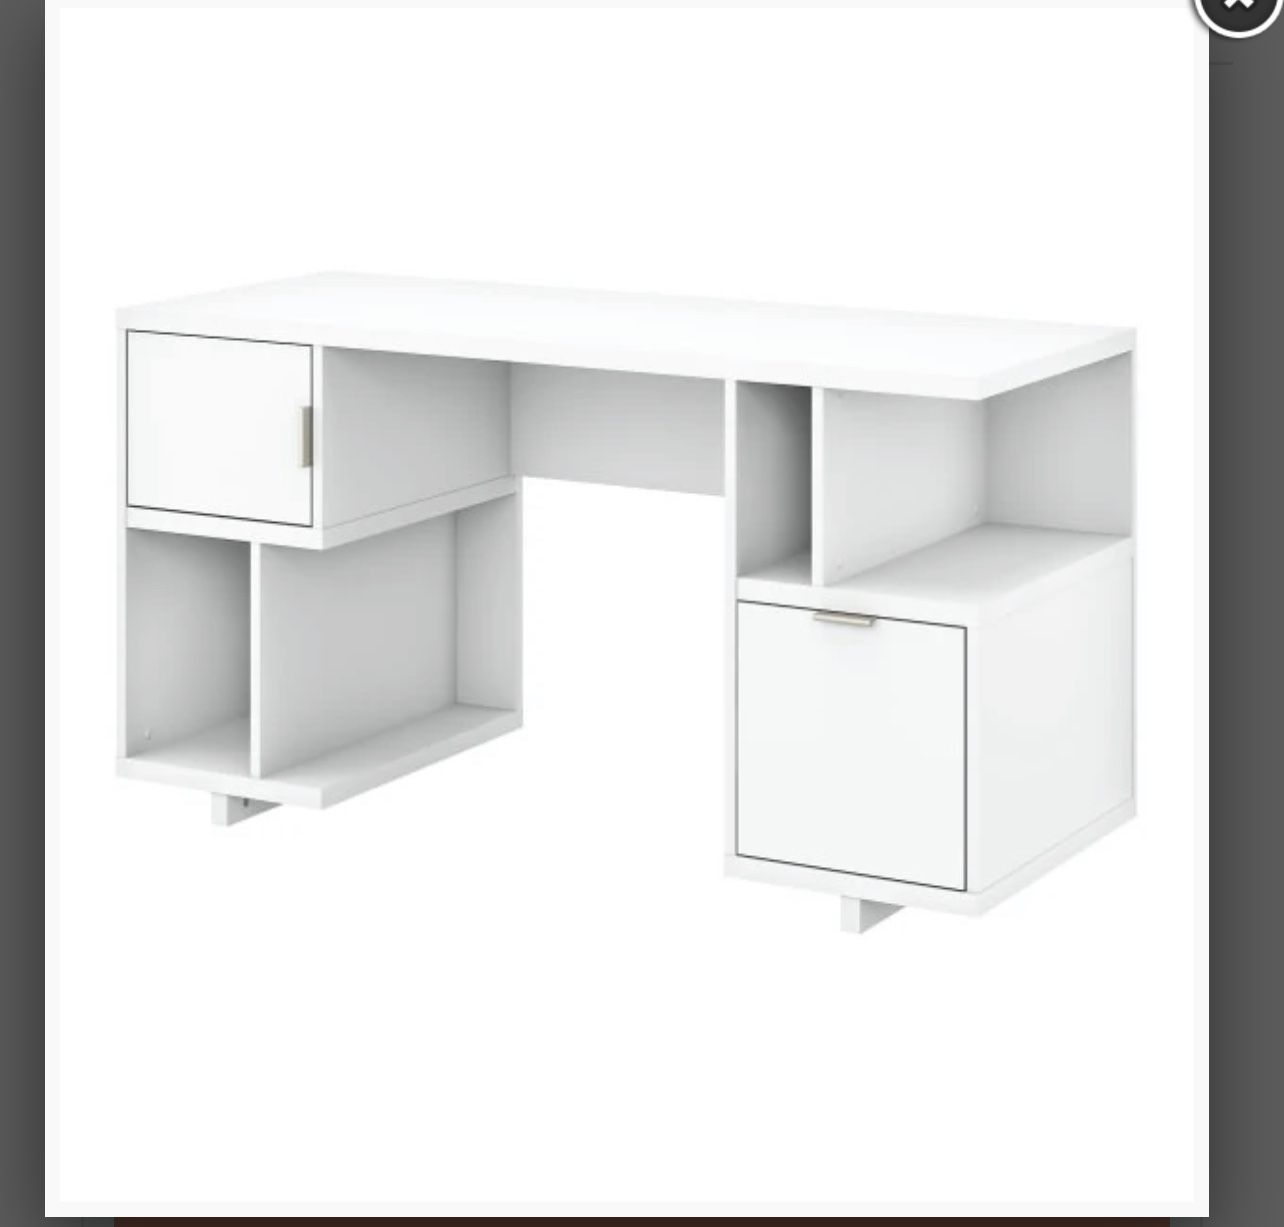 Work Desk - Brand New - Still In Box